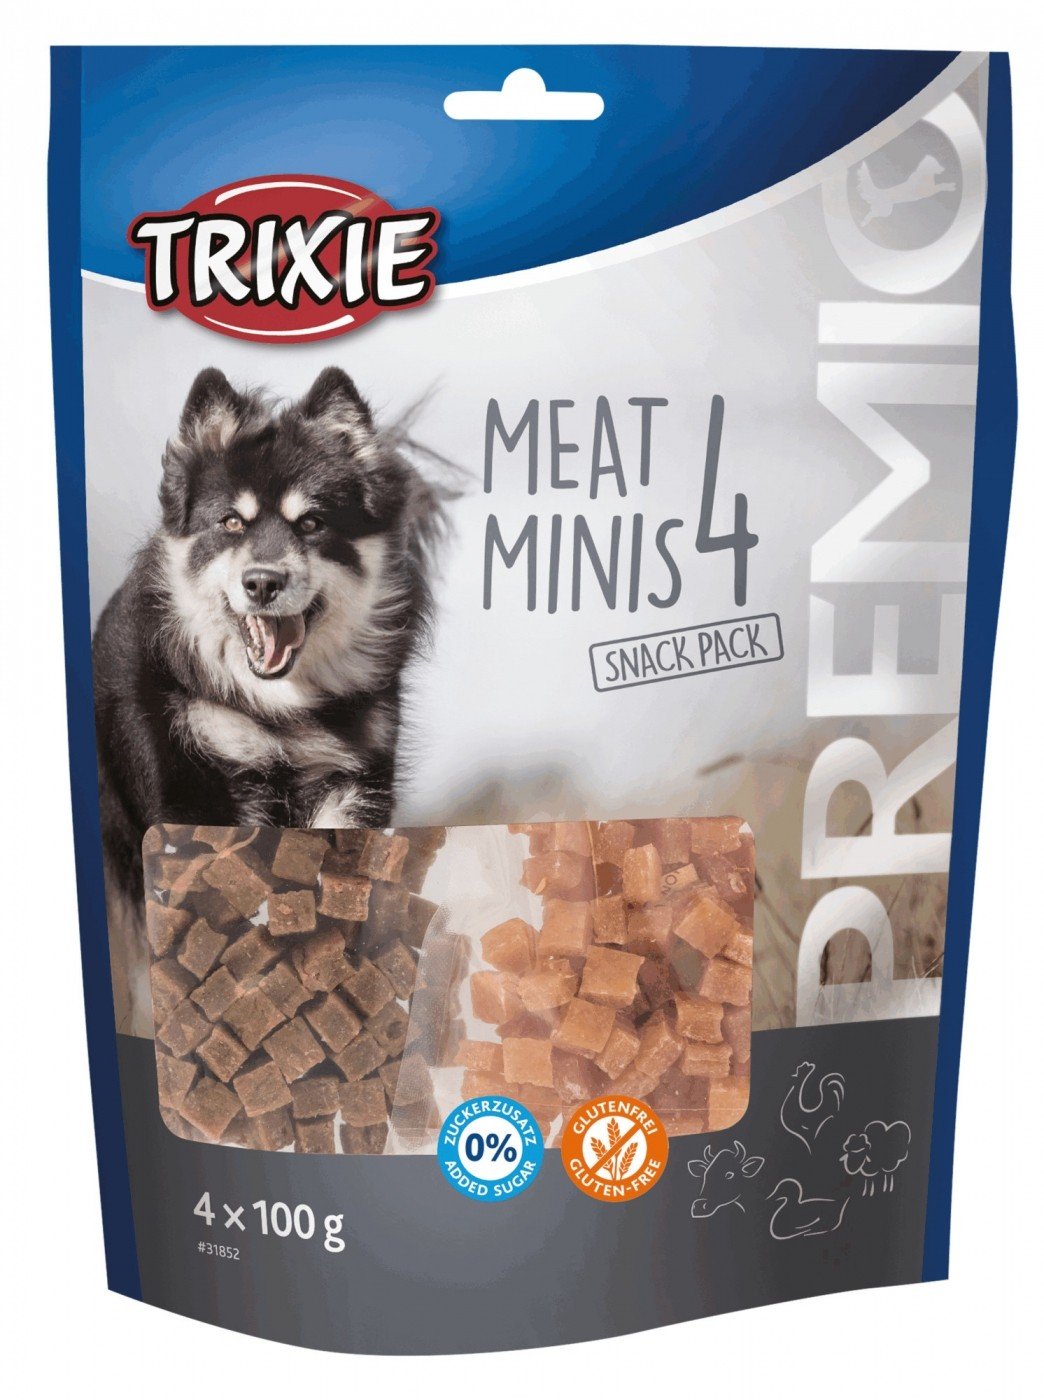 PREMIO 4 Meat Minis pack mini snacks